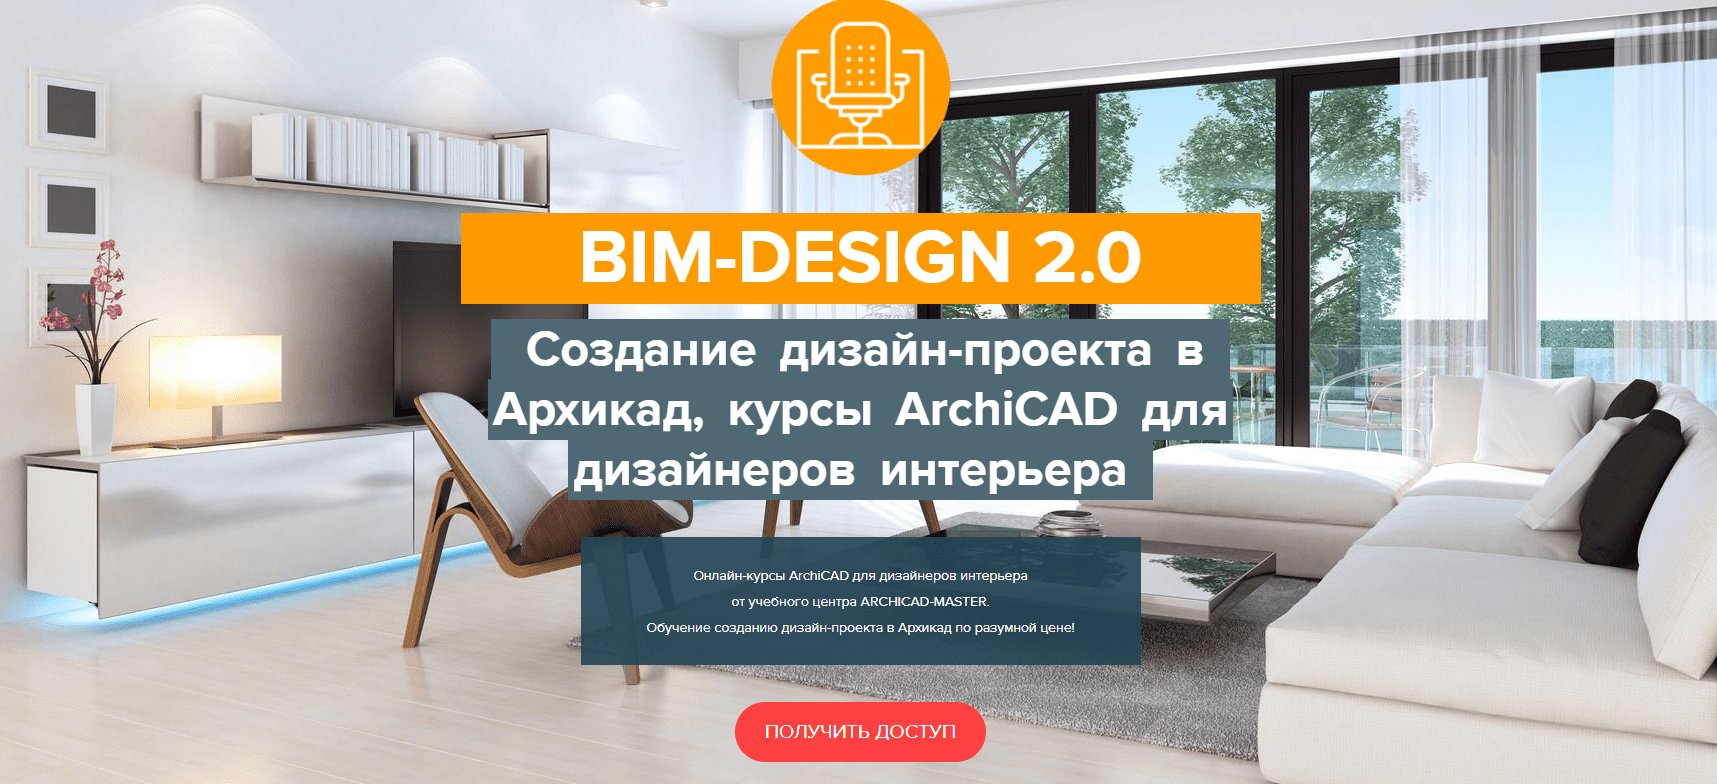 BIM-Design 2.0 Михаил холодов